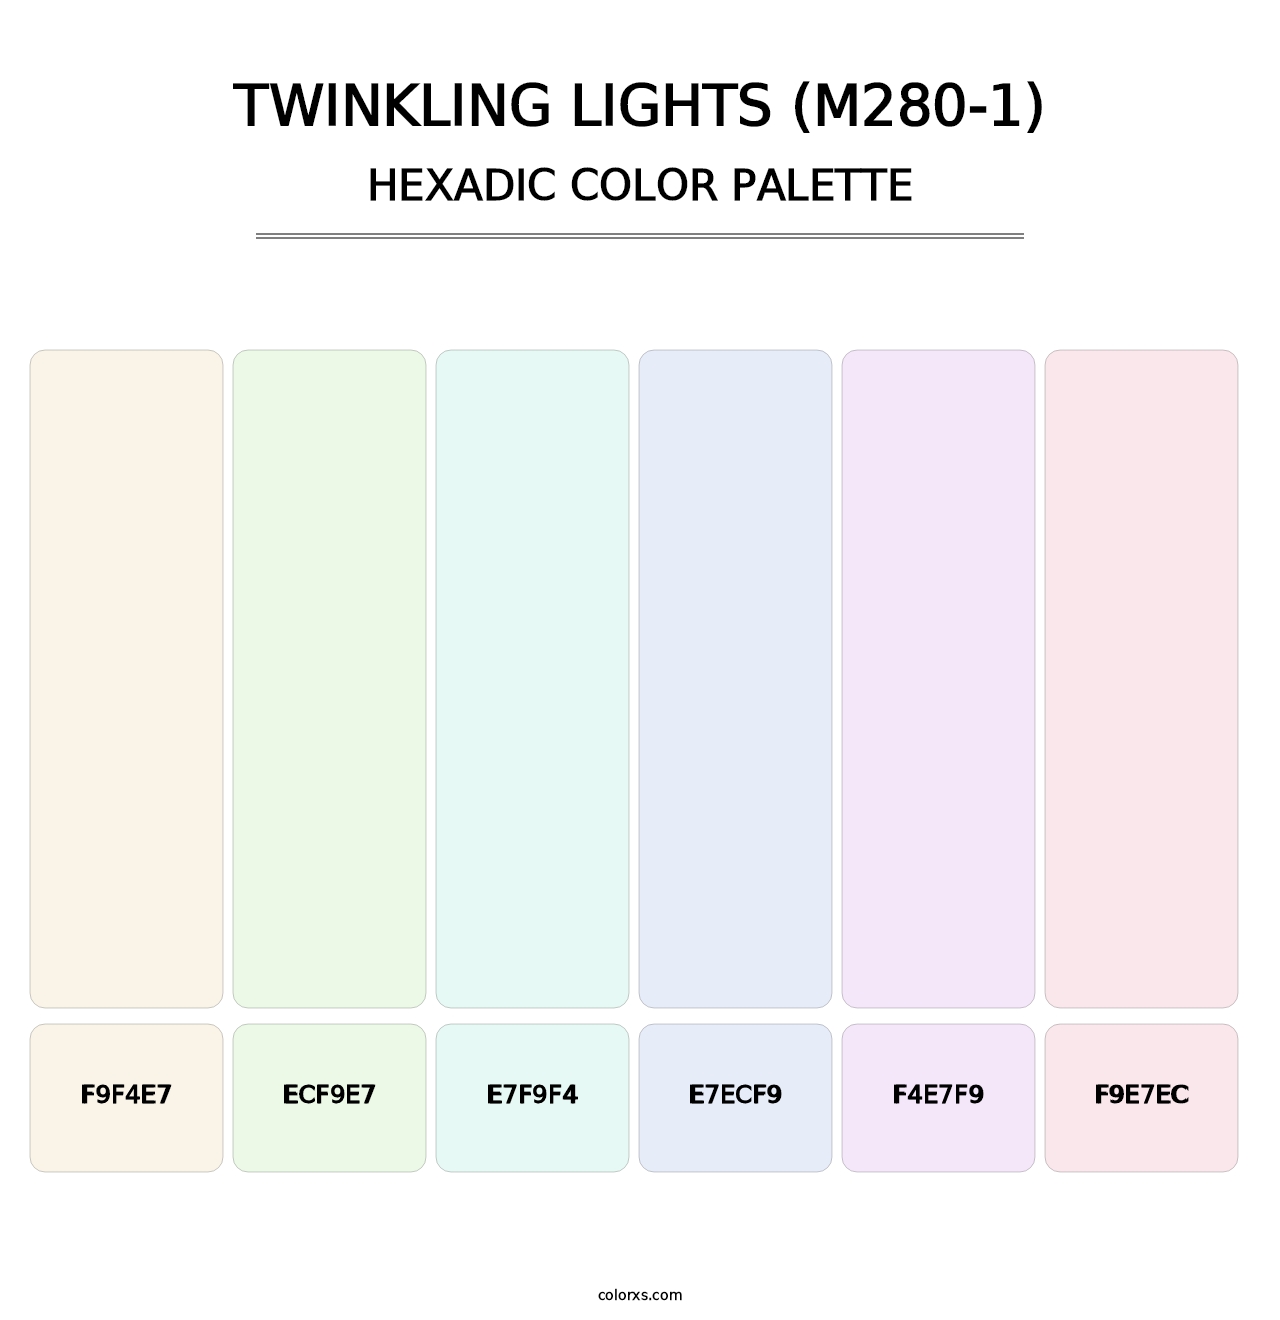 Twinkling Lights (M280-1) - Hexadic Color Palette